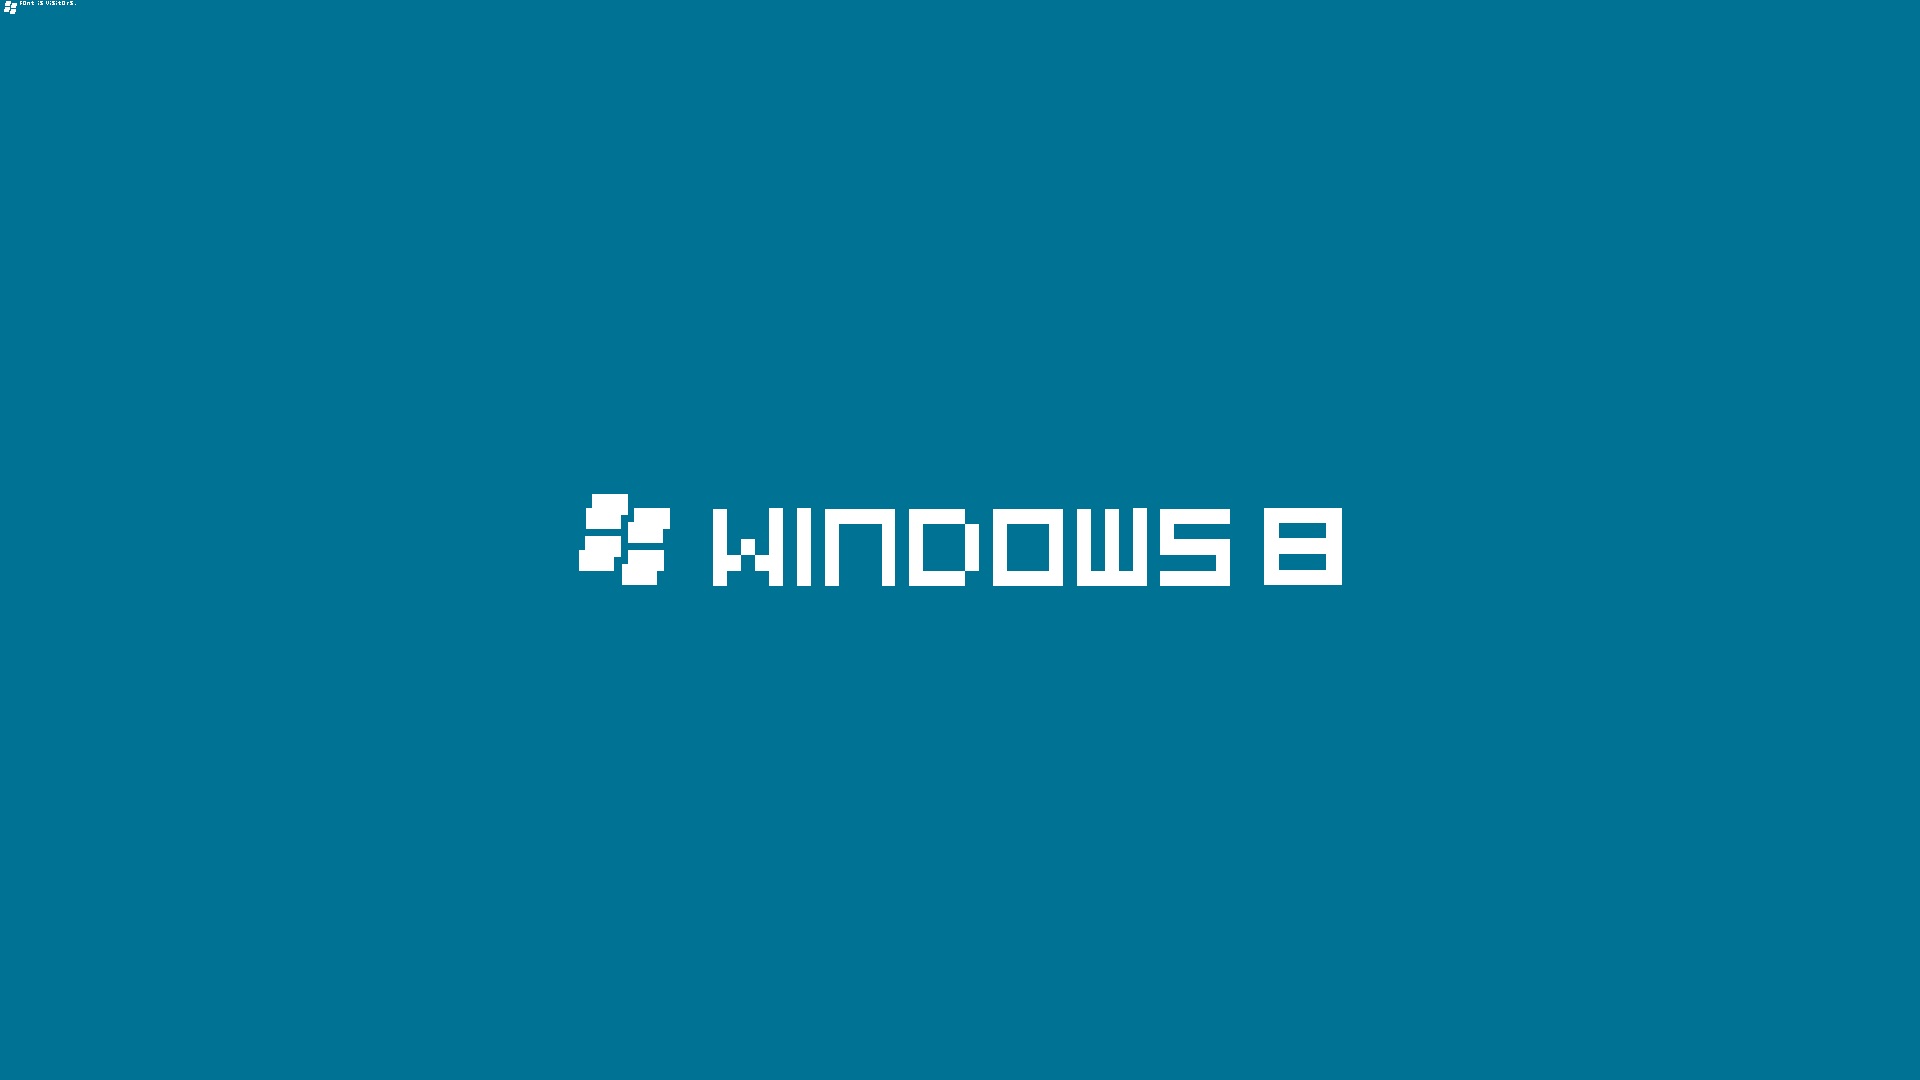 windows 8 bit wallpapers 31017 1920x1080jpg 1920x1080